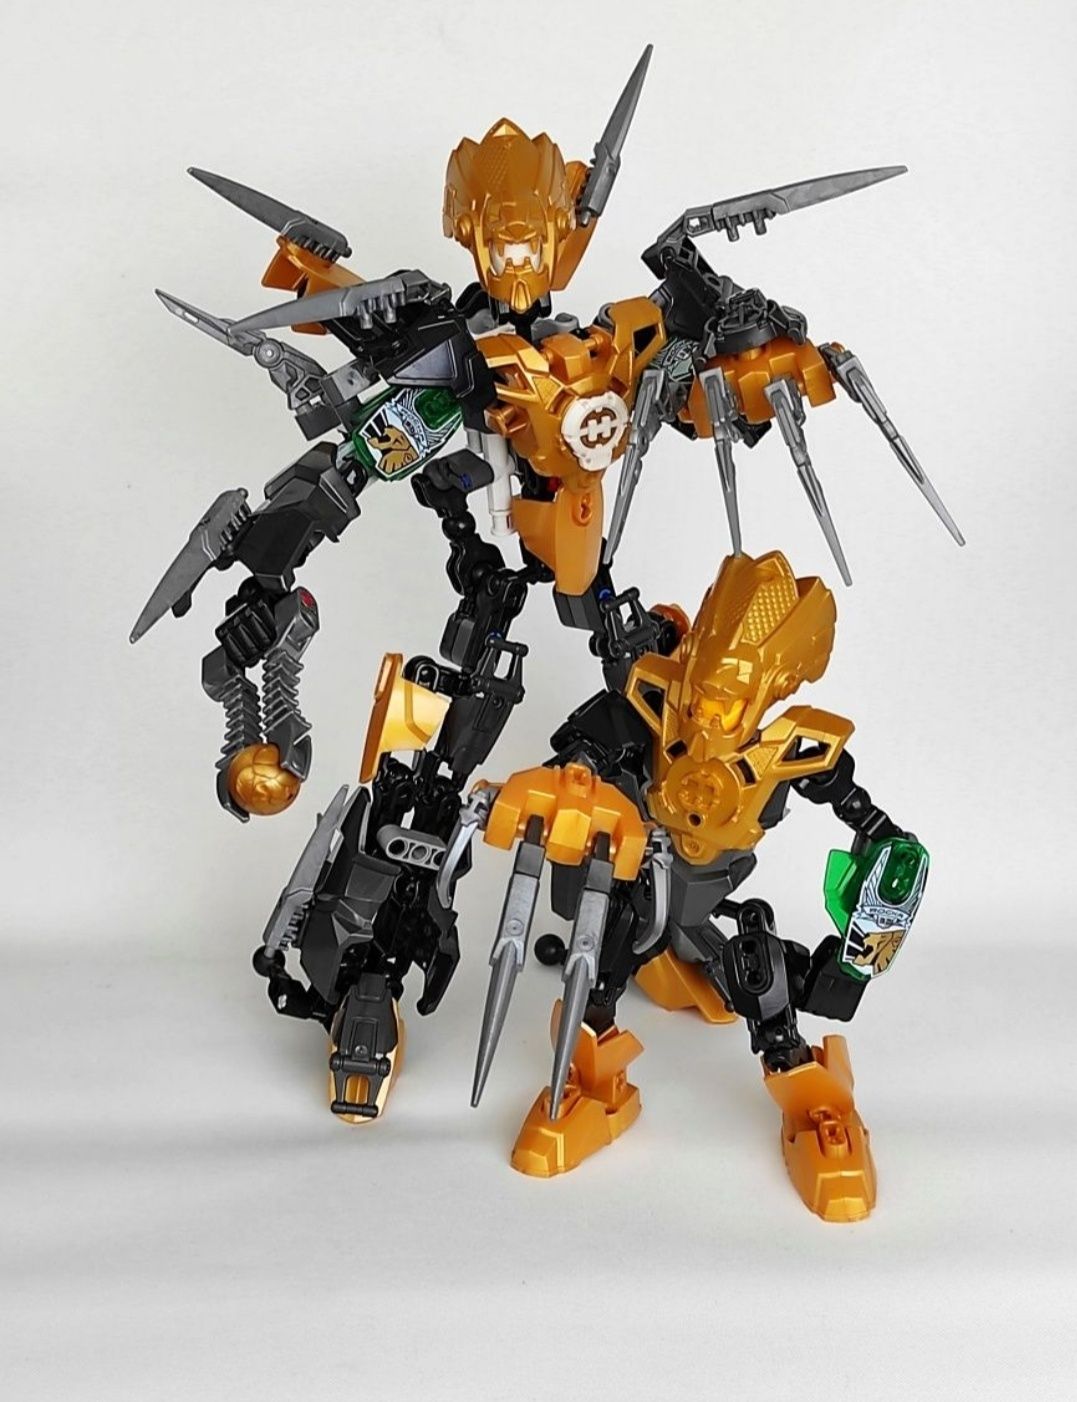 Lego Ninjago chima bionicle лего Ніндзяго дракон біонікл hero factory